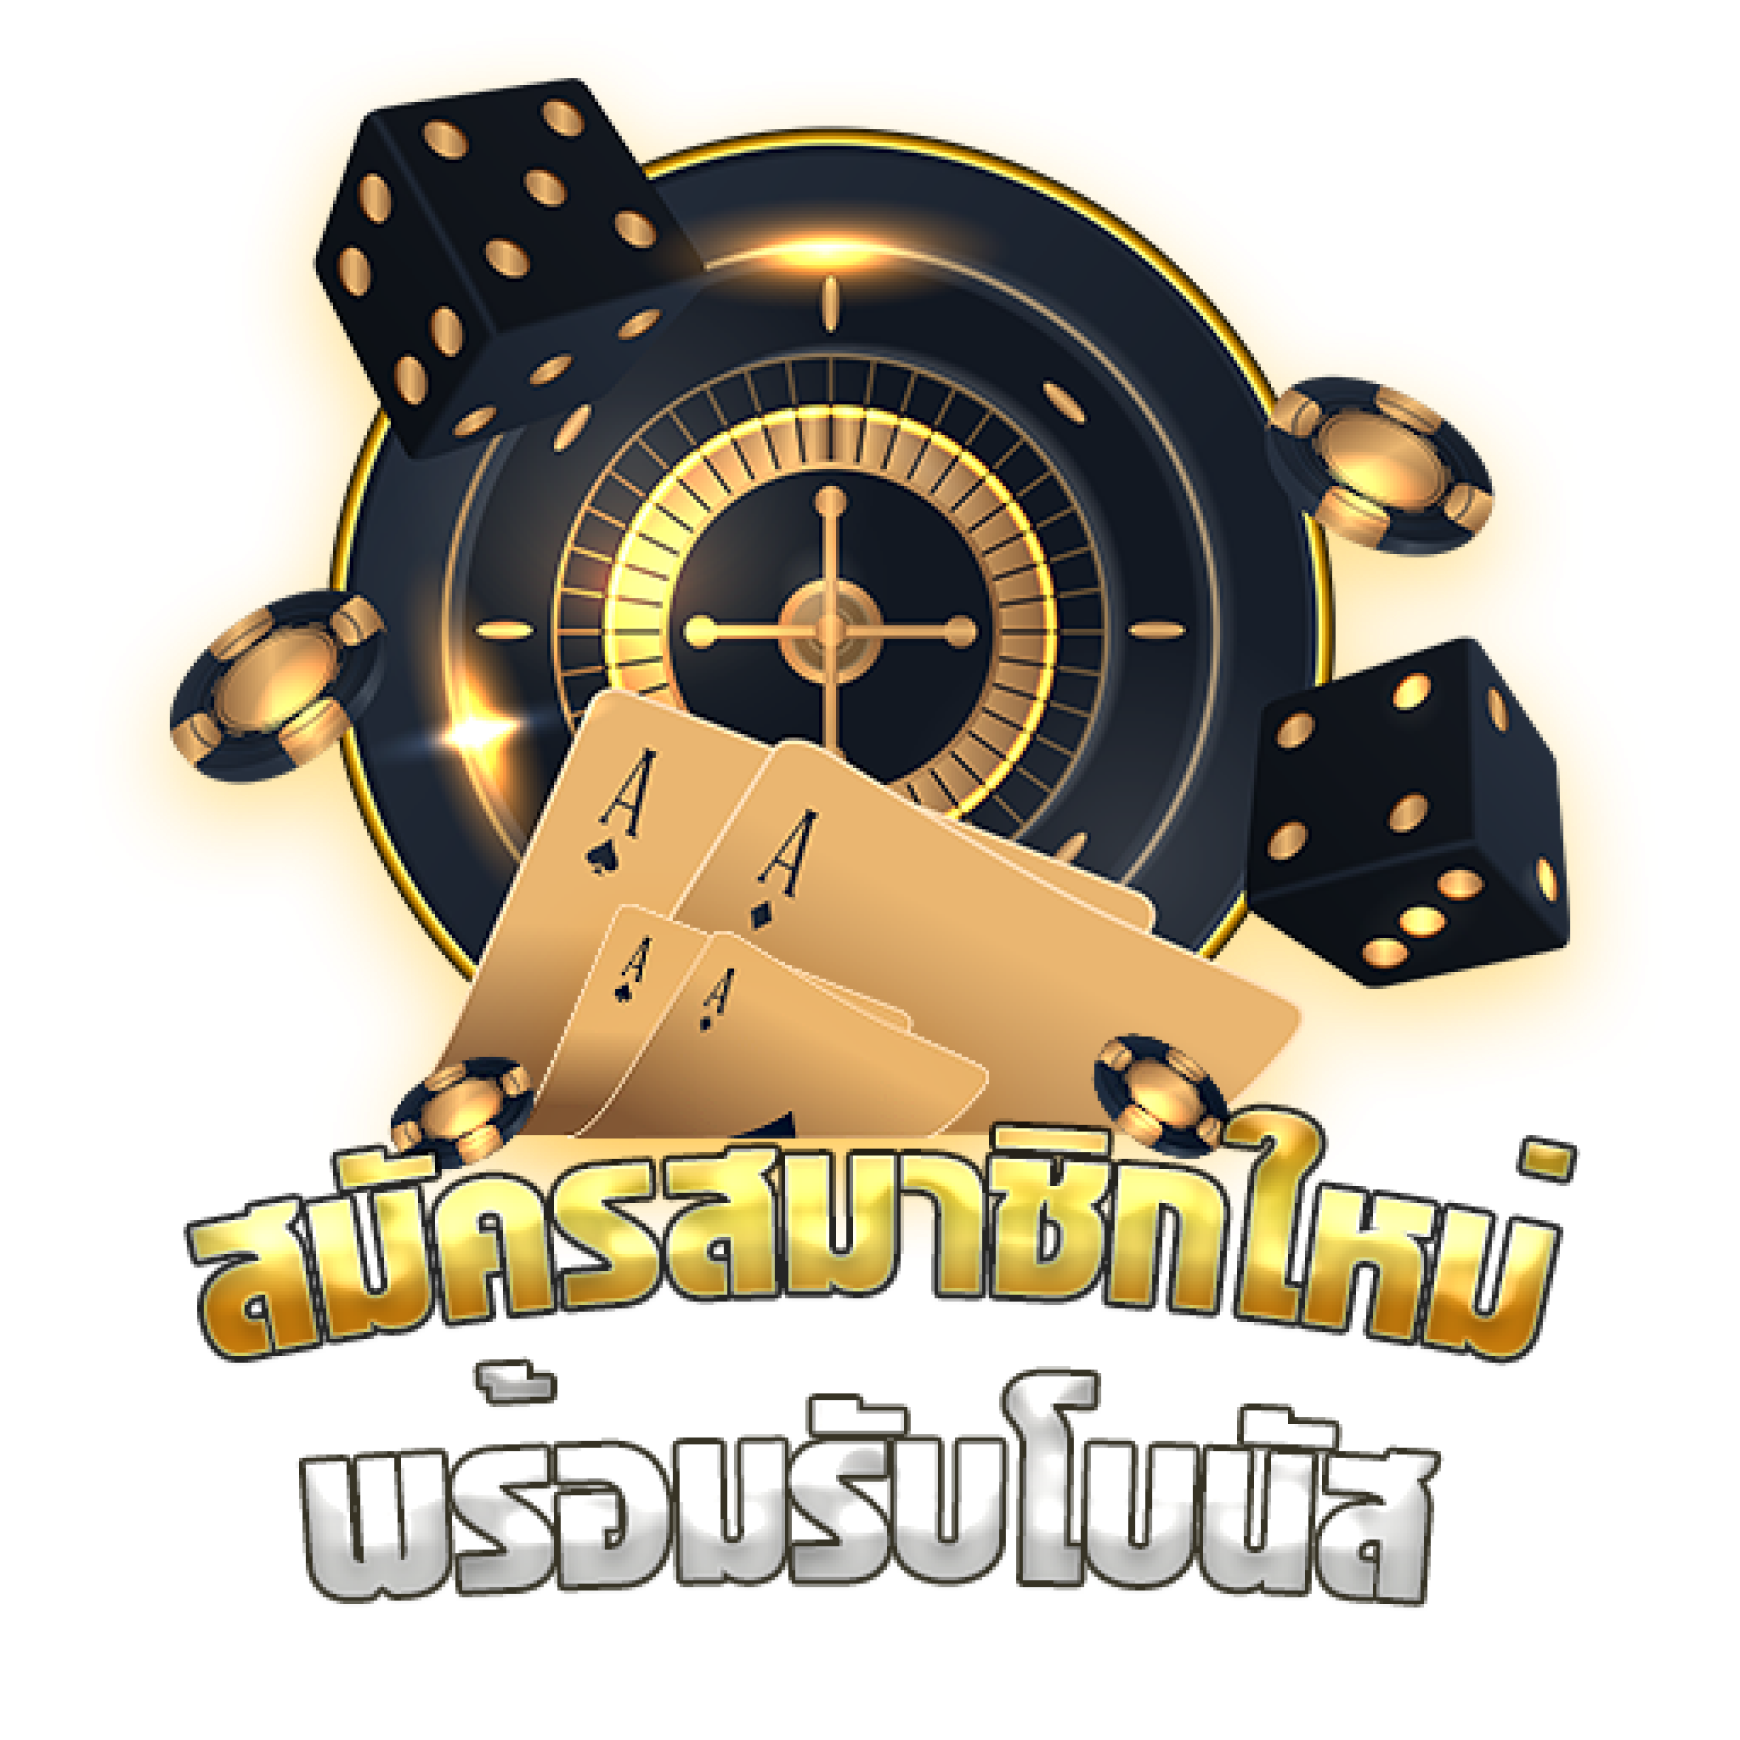 button popup left - Sa www.sagame168th.com 23 พฤษภาคม 65 บาคาร่า สมัครบาคาร่าออนไลน์ เว็บบาคาร่า 168 เล่น casino online ฟรี ท๊อป 10 Thai by Traci